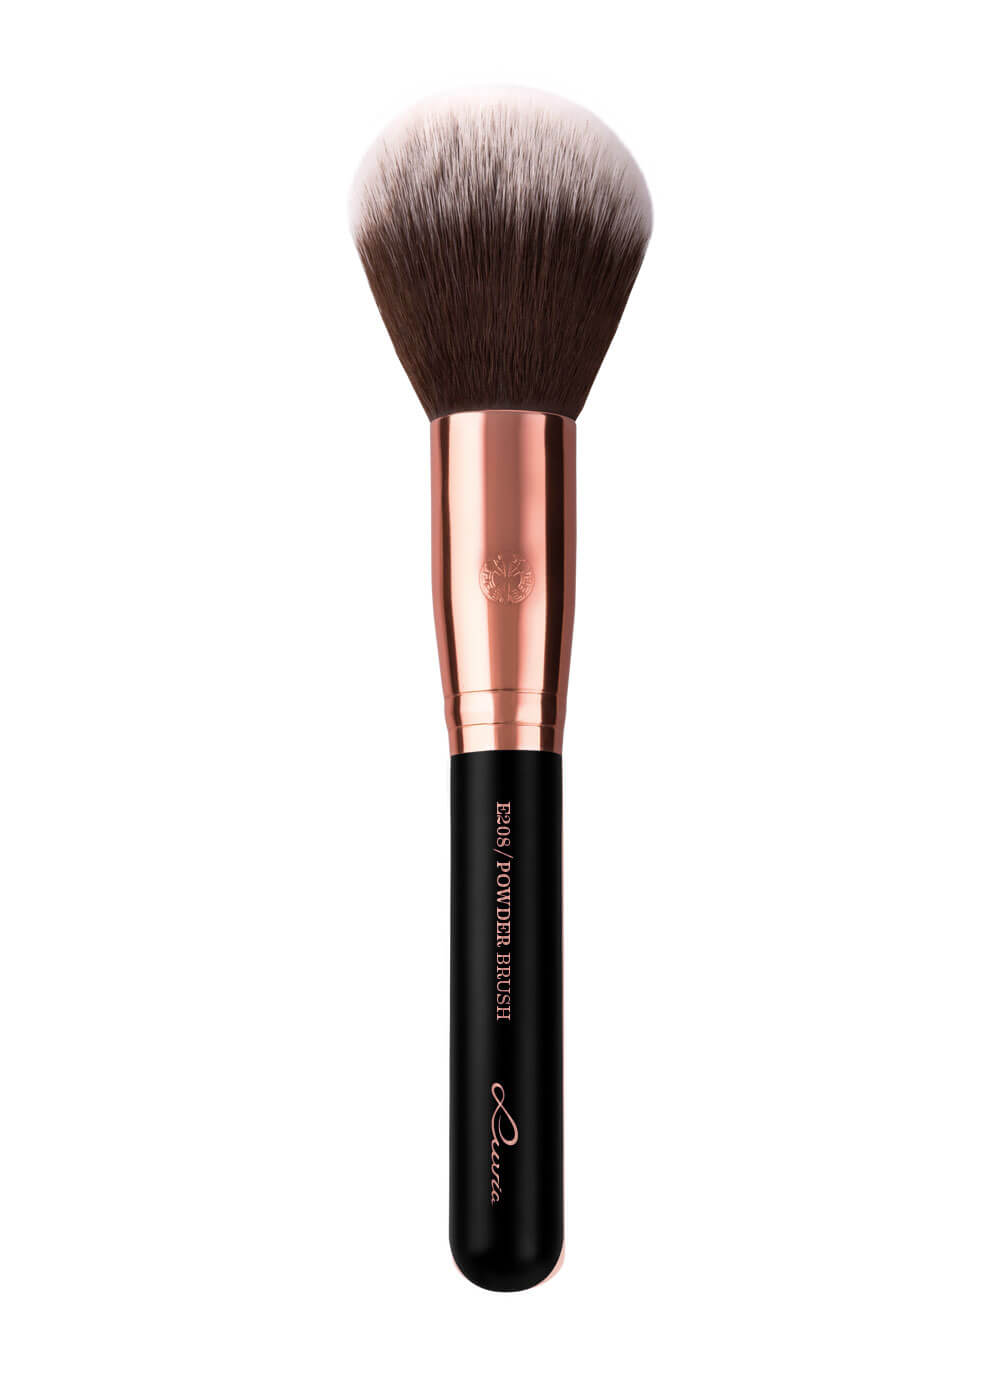 E208 Powder Brush – Luvia Cosmetics | Make-Up-Pinsel